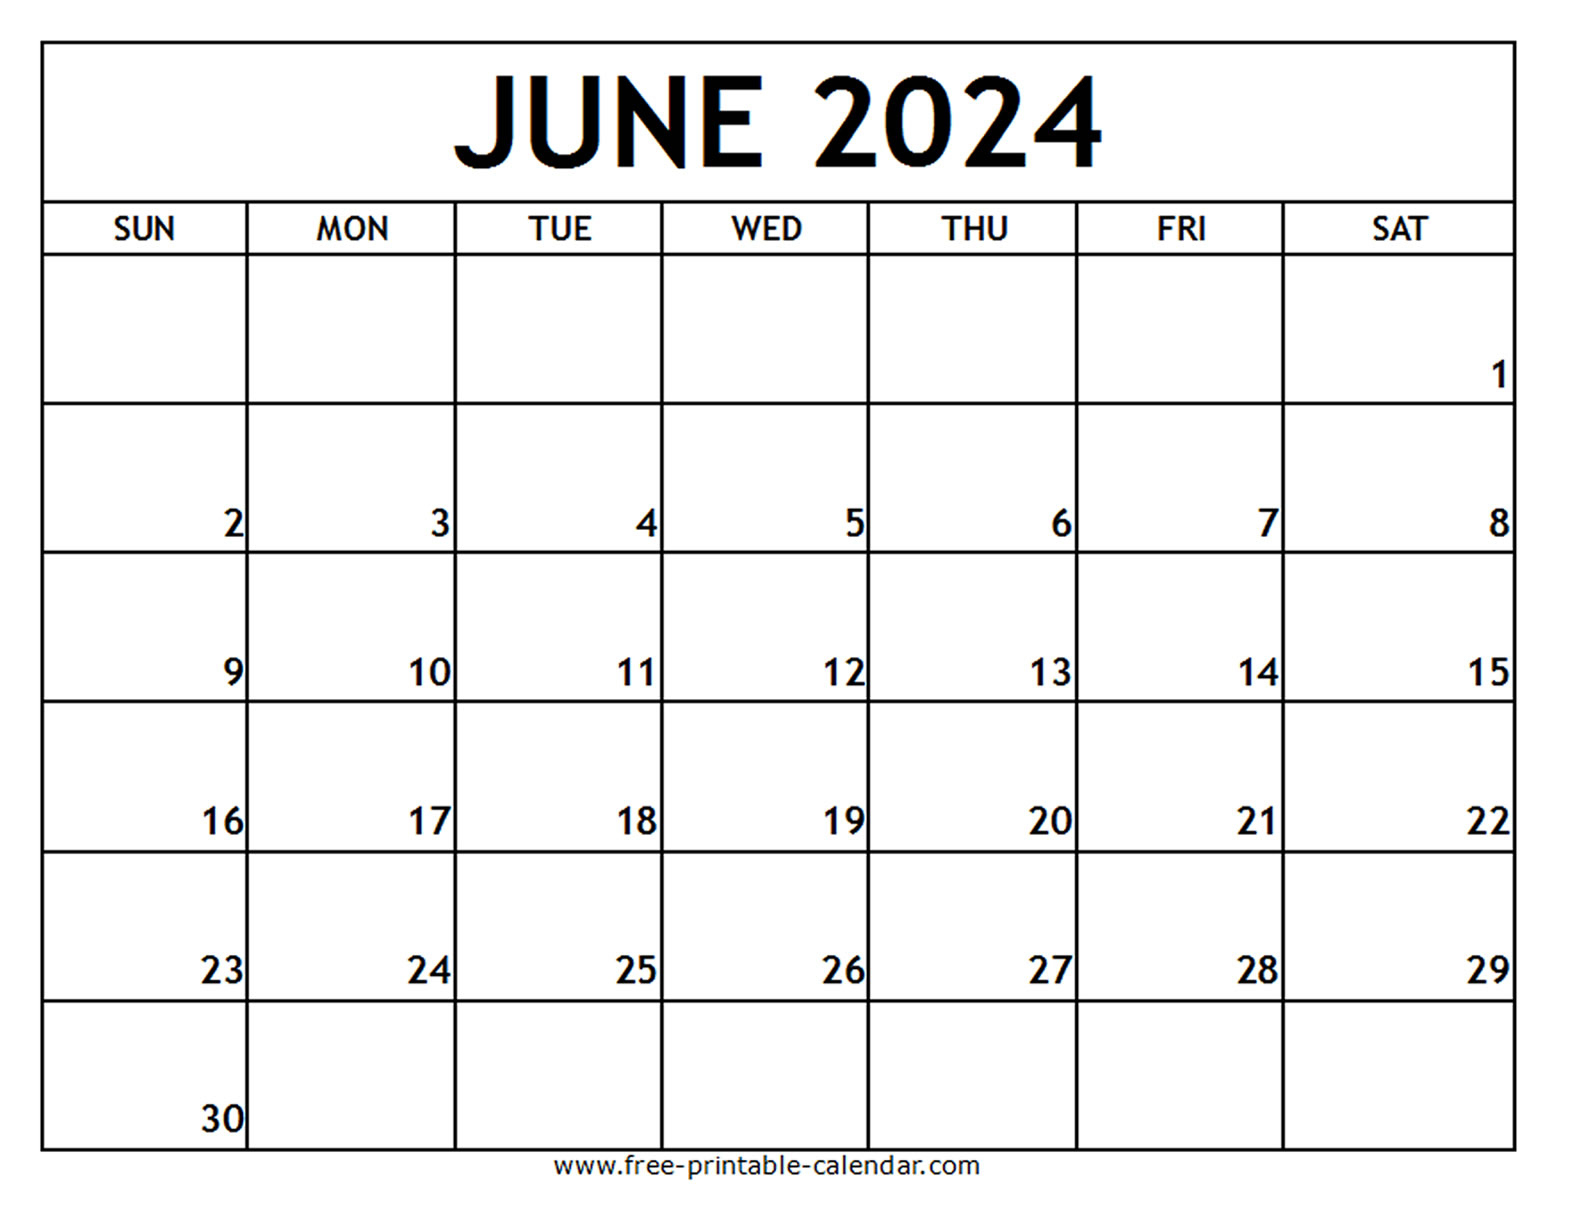 June 2024 Printable Calendar - Free-Printable-Calendar | Free Editable June 2024 Calendar